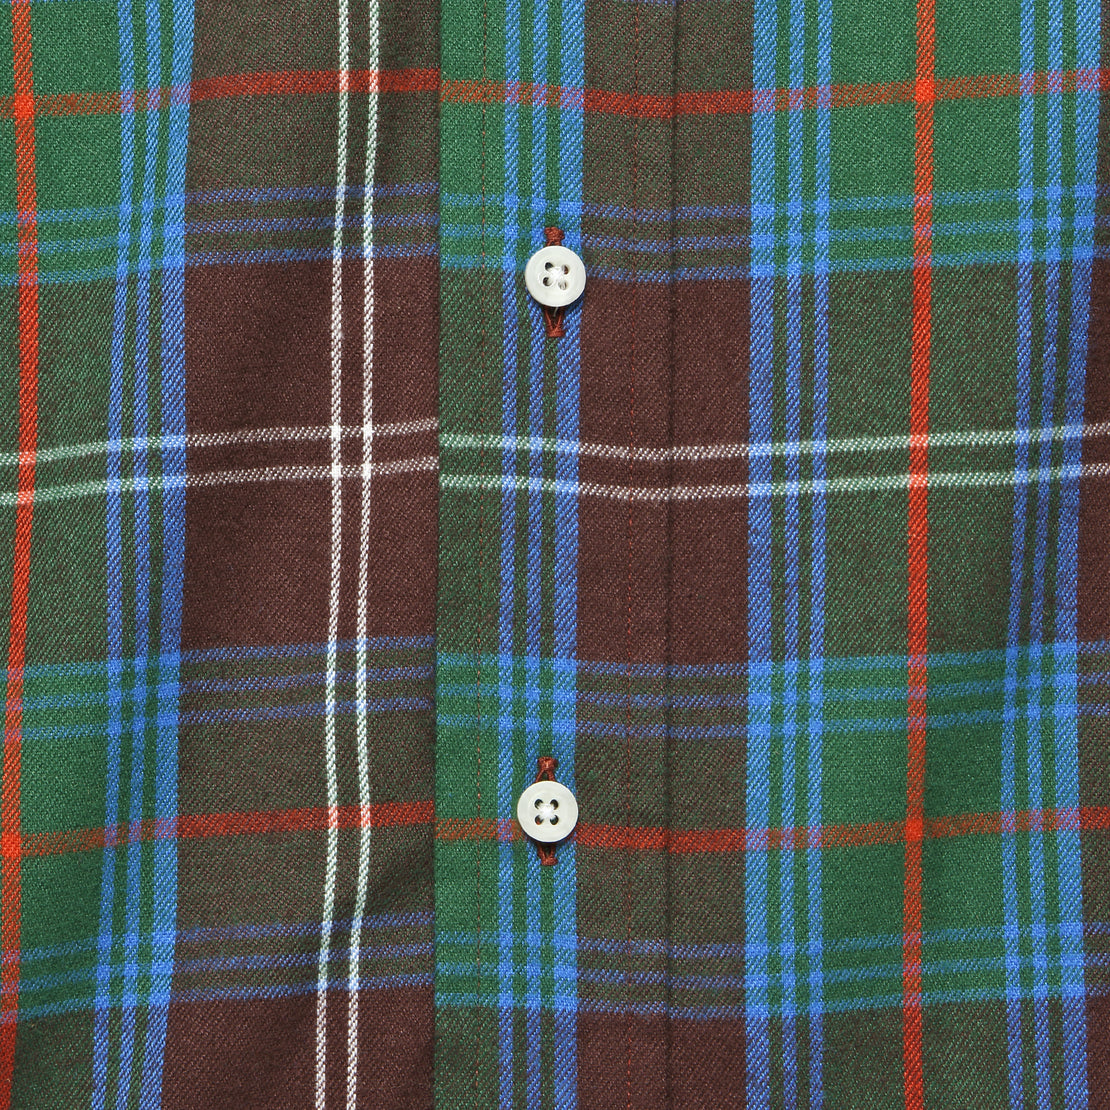 Tartan Flannel Shirt - Chisholm - Gitman Vintage - STAG Provisions - Tops - L/S Woven - Plaid